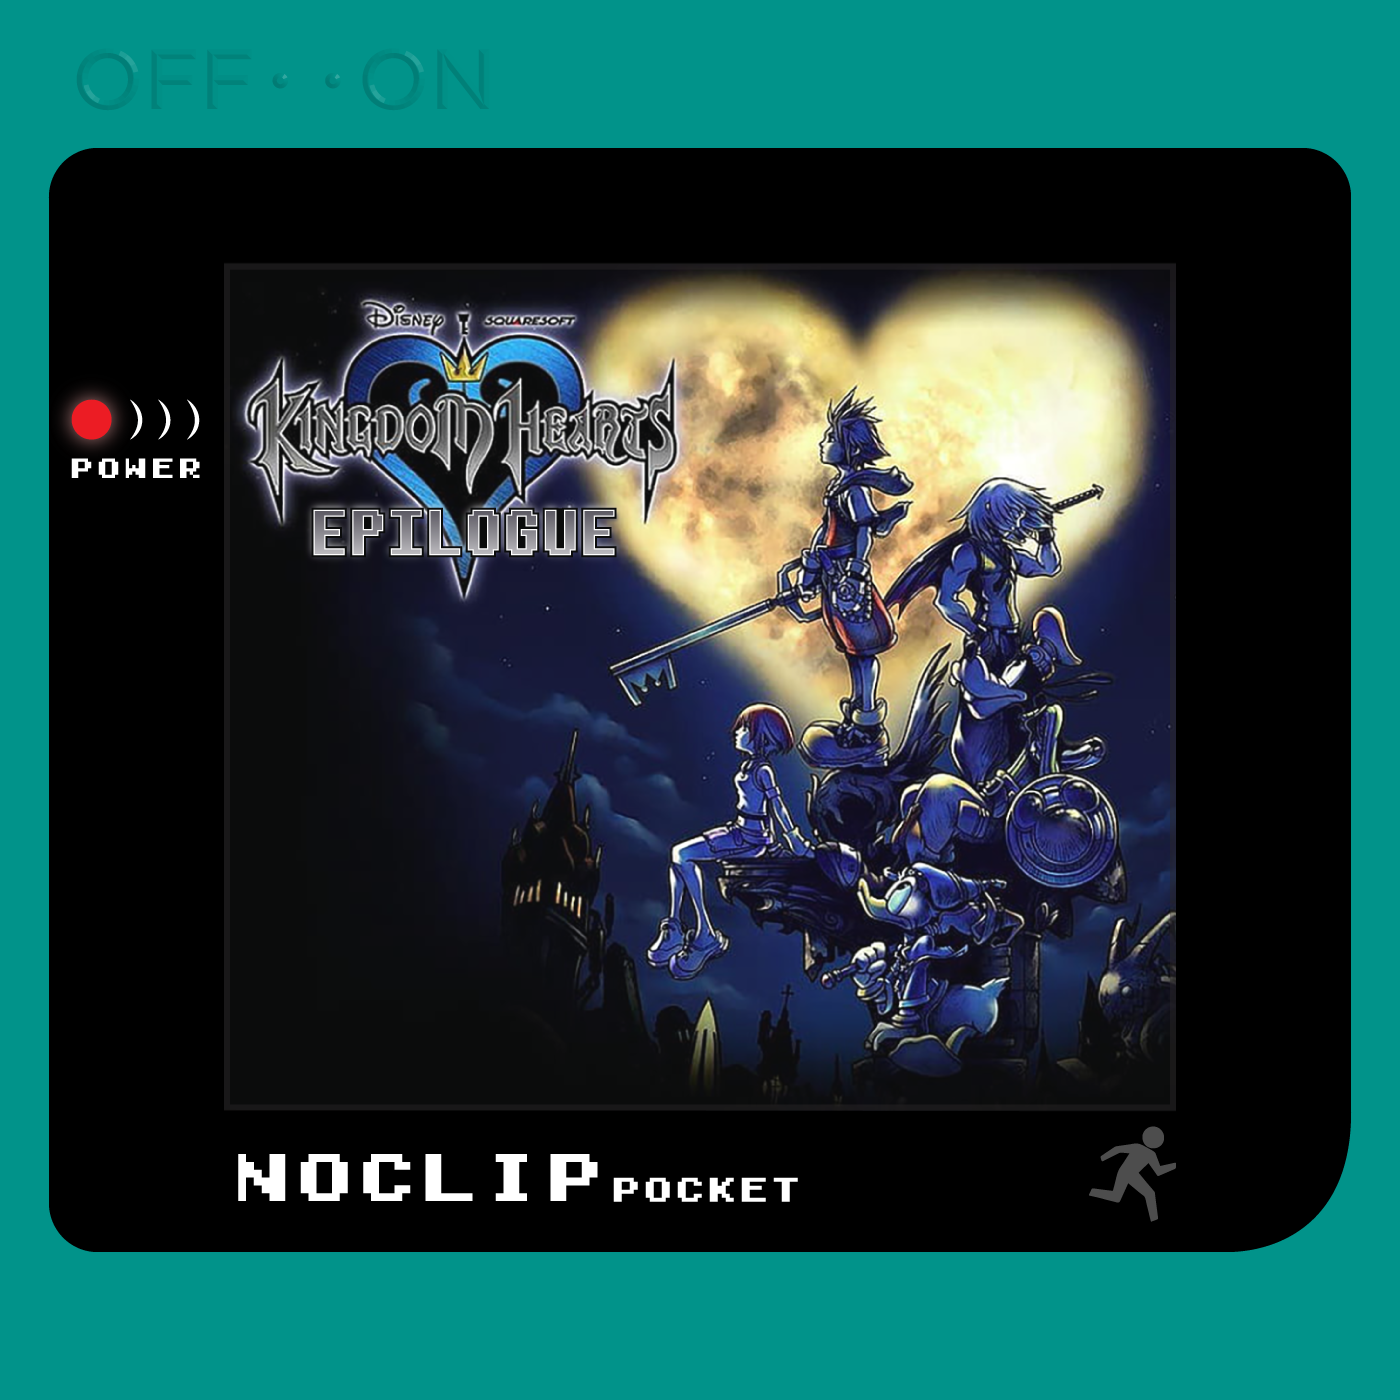 NOCLIP Pocket E76 - Attacked by a Chair - Vampire Survivors — NOCLIP